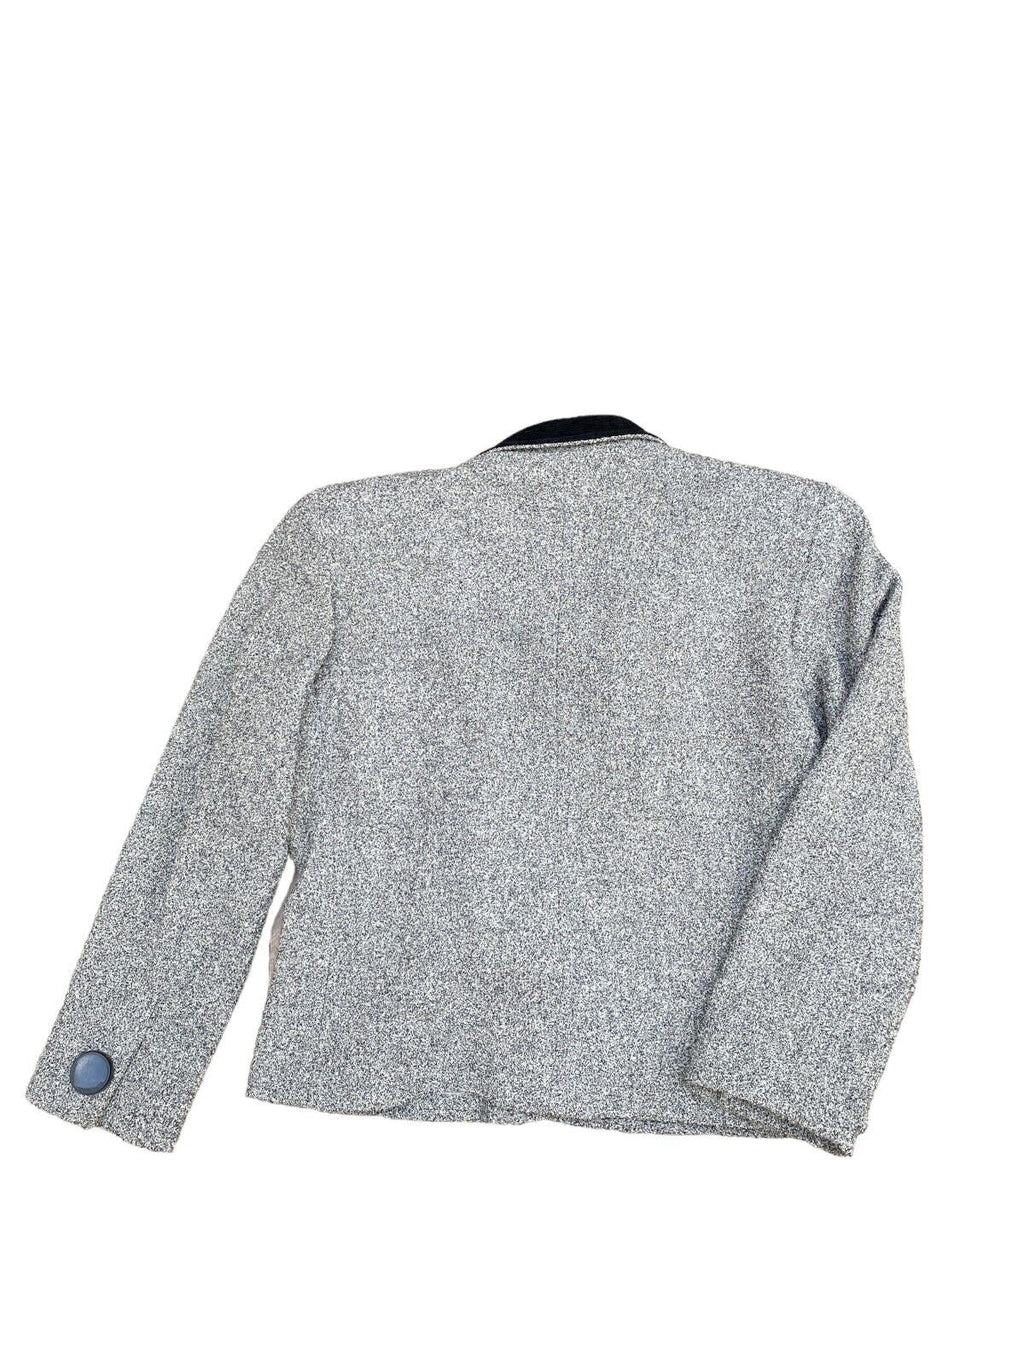 Hiver 1994 Grey Wool Blazer Jacket Size 38 M